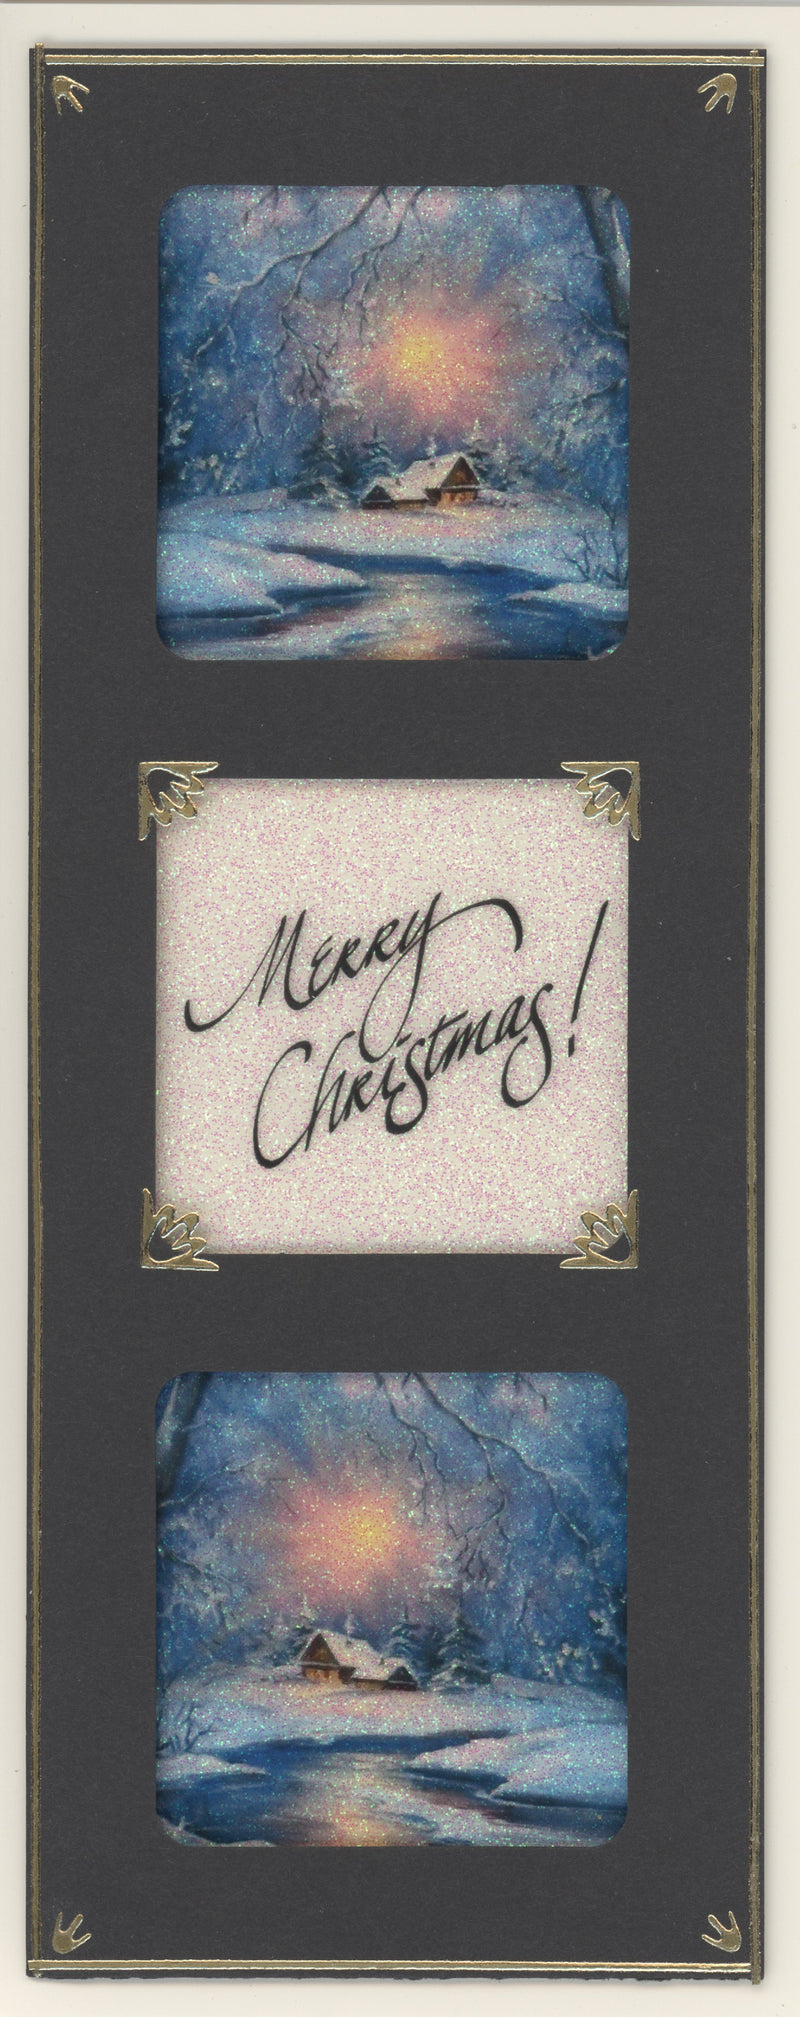 GlitterFilm & Vintage Hues 12 Slimline Card Kit Winter Scenes - Merry Christmas!